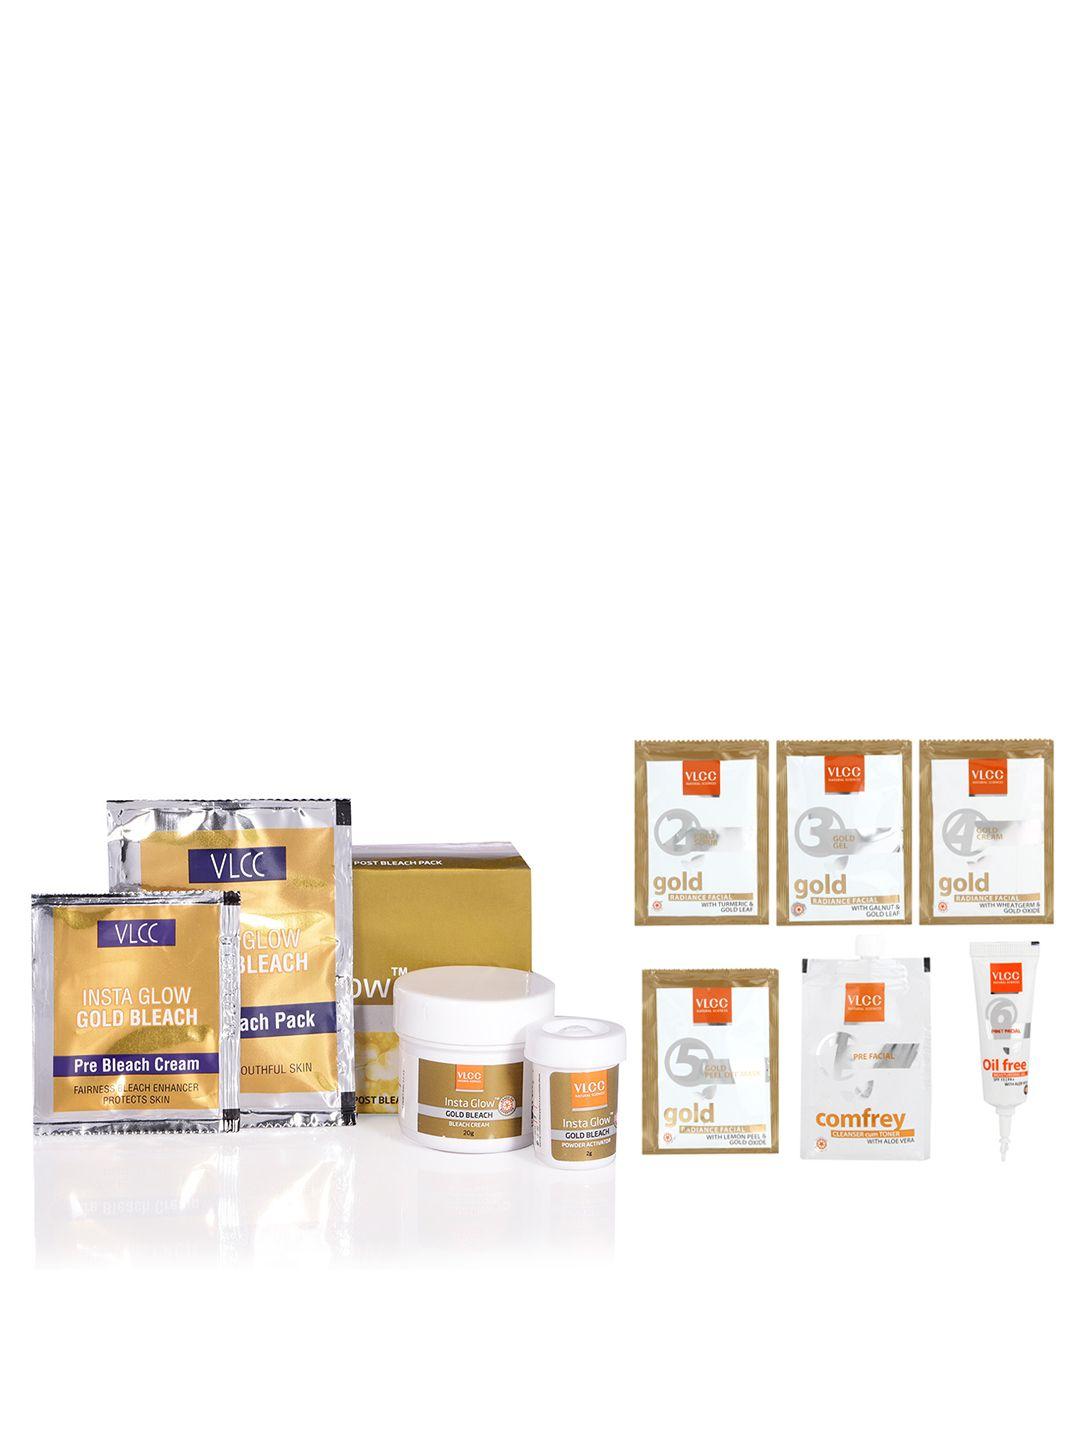 vlcc set of gold single facial kit - 60 g & insta glow gold bleach - 30 g